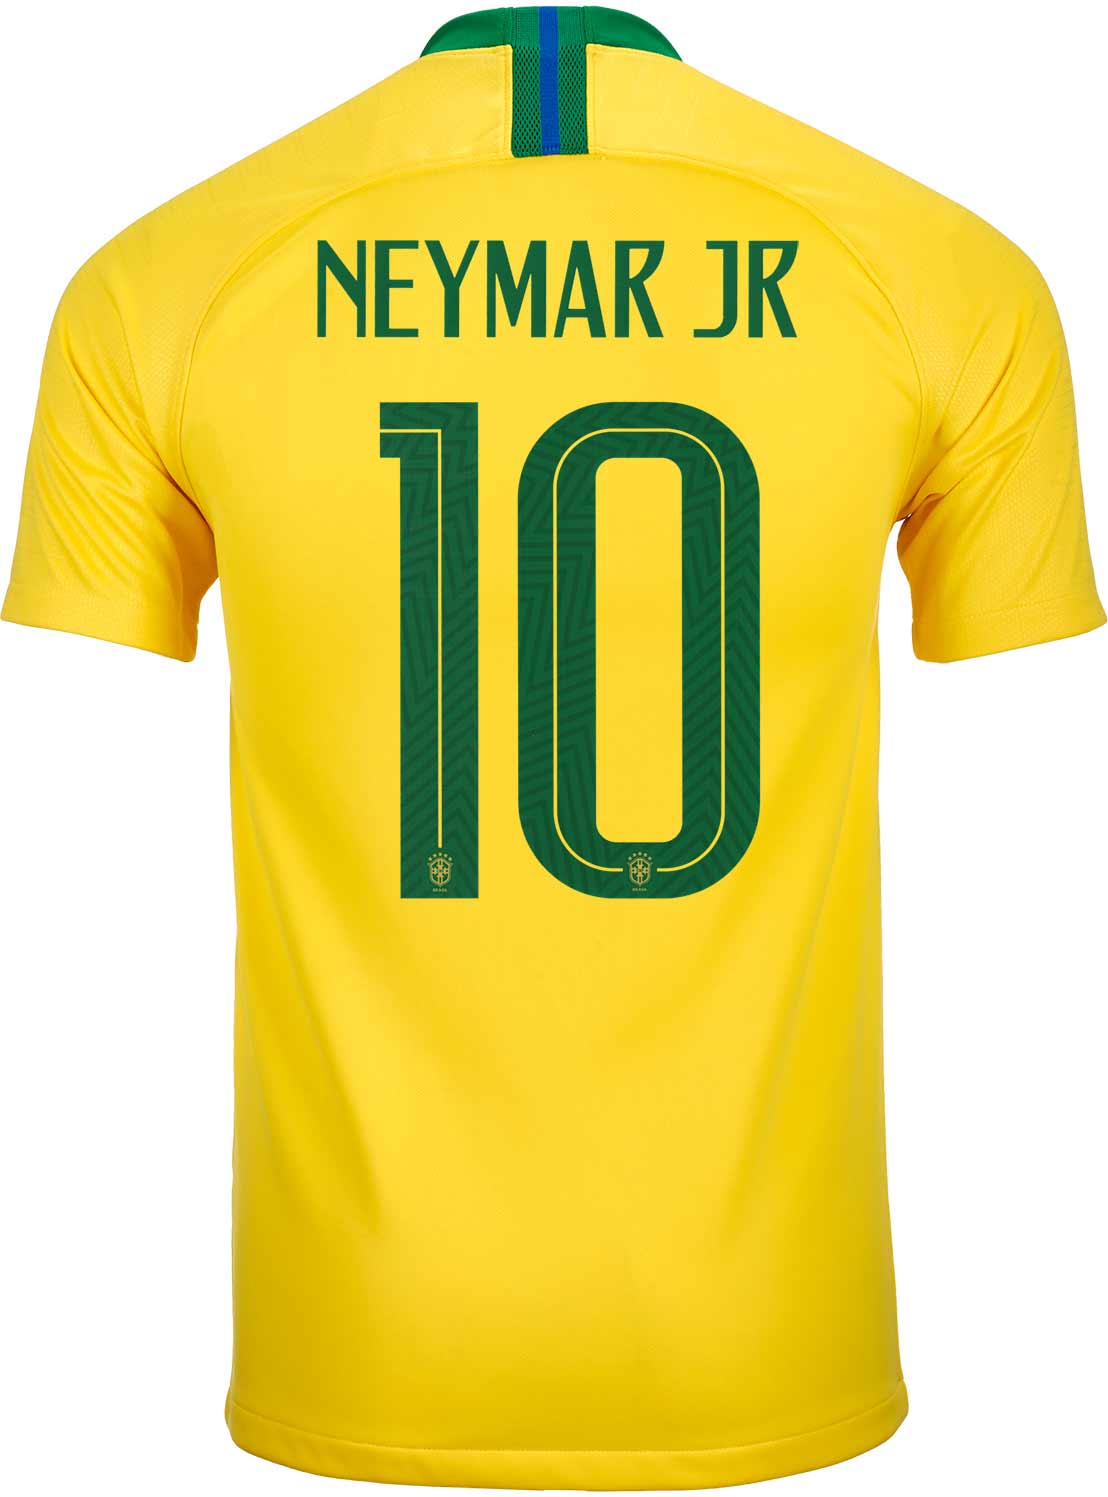 Brazil 2018 - 2019 Home football shirt jersey Nike Size M #10